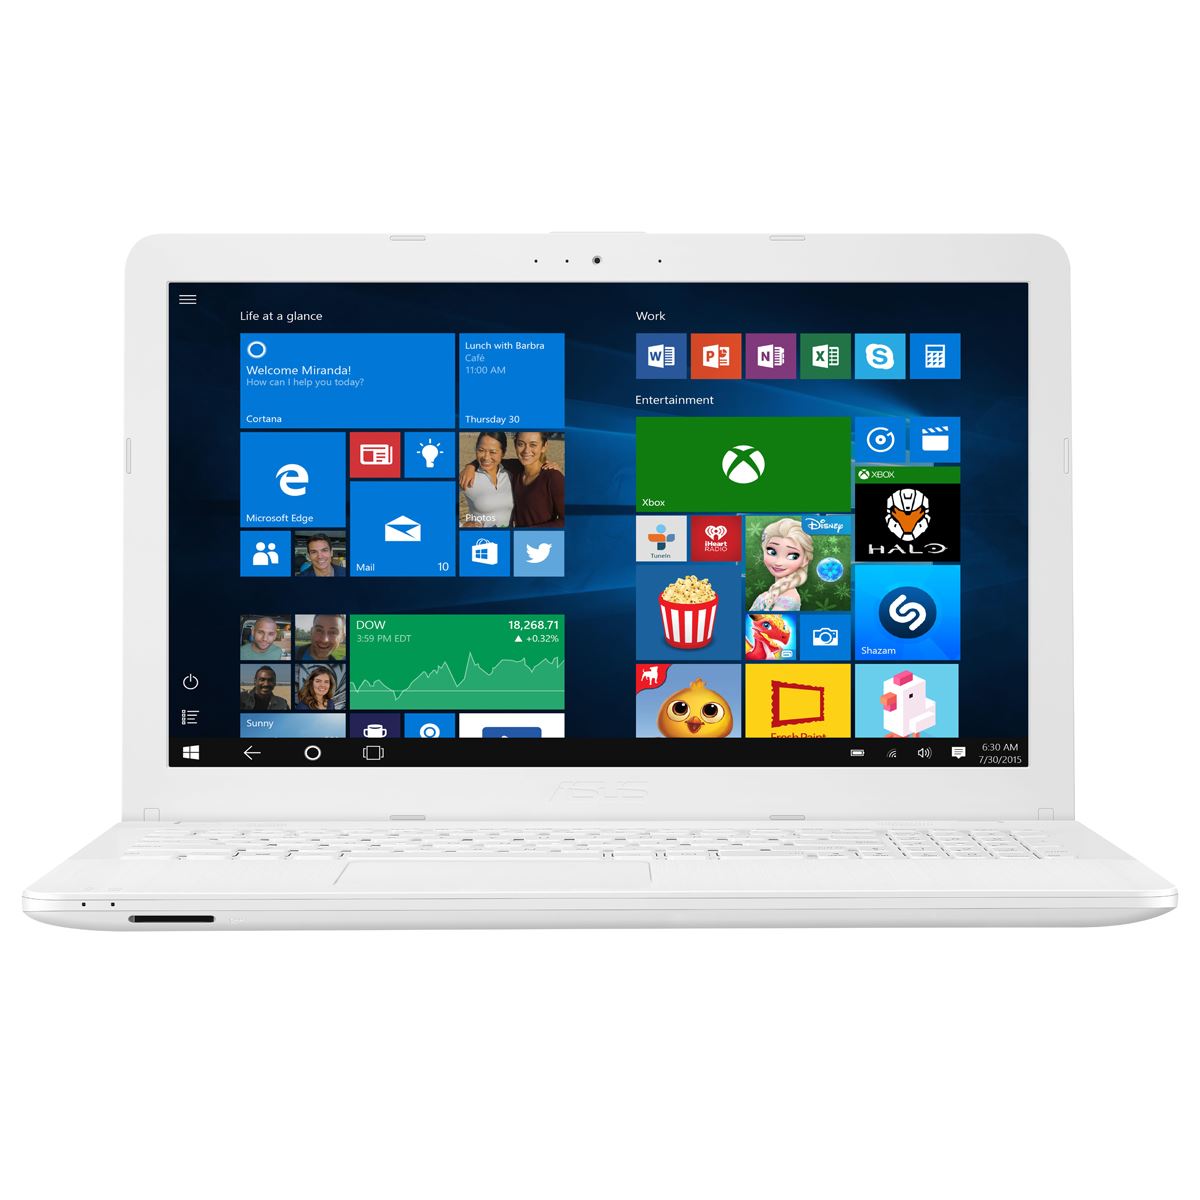 Laptop Asus VivoBook Max 15.6" Blanca